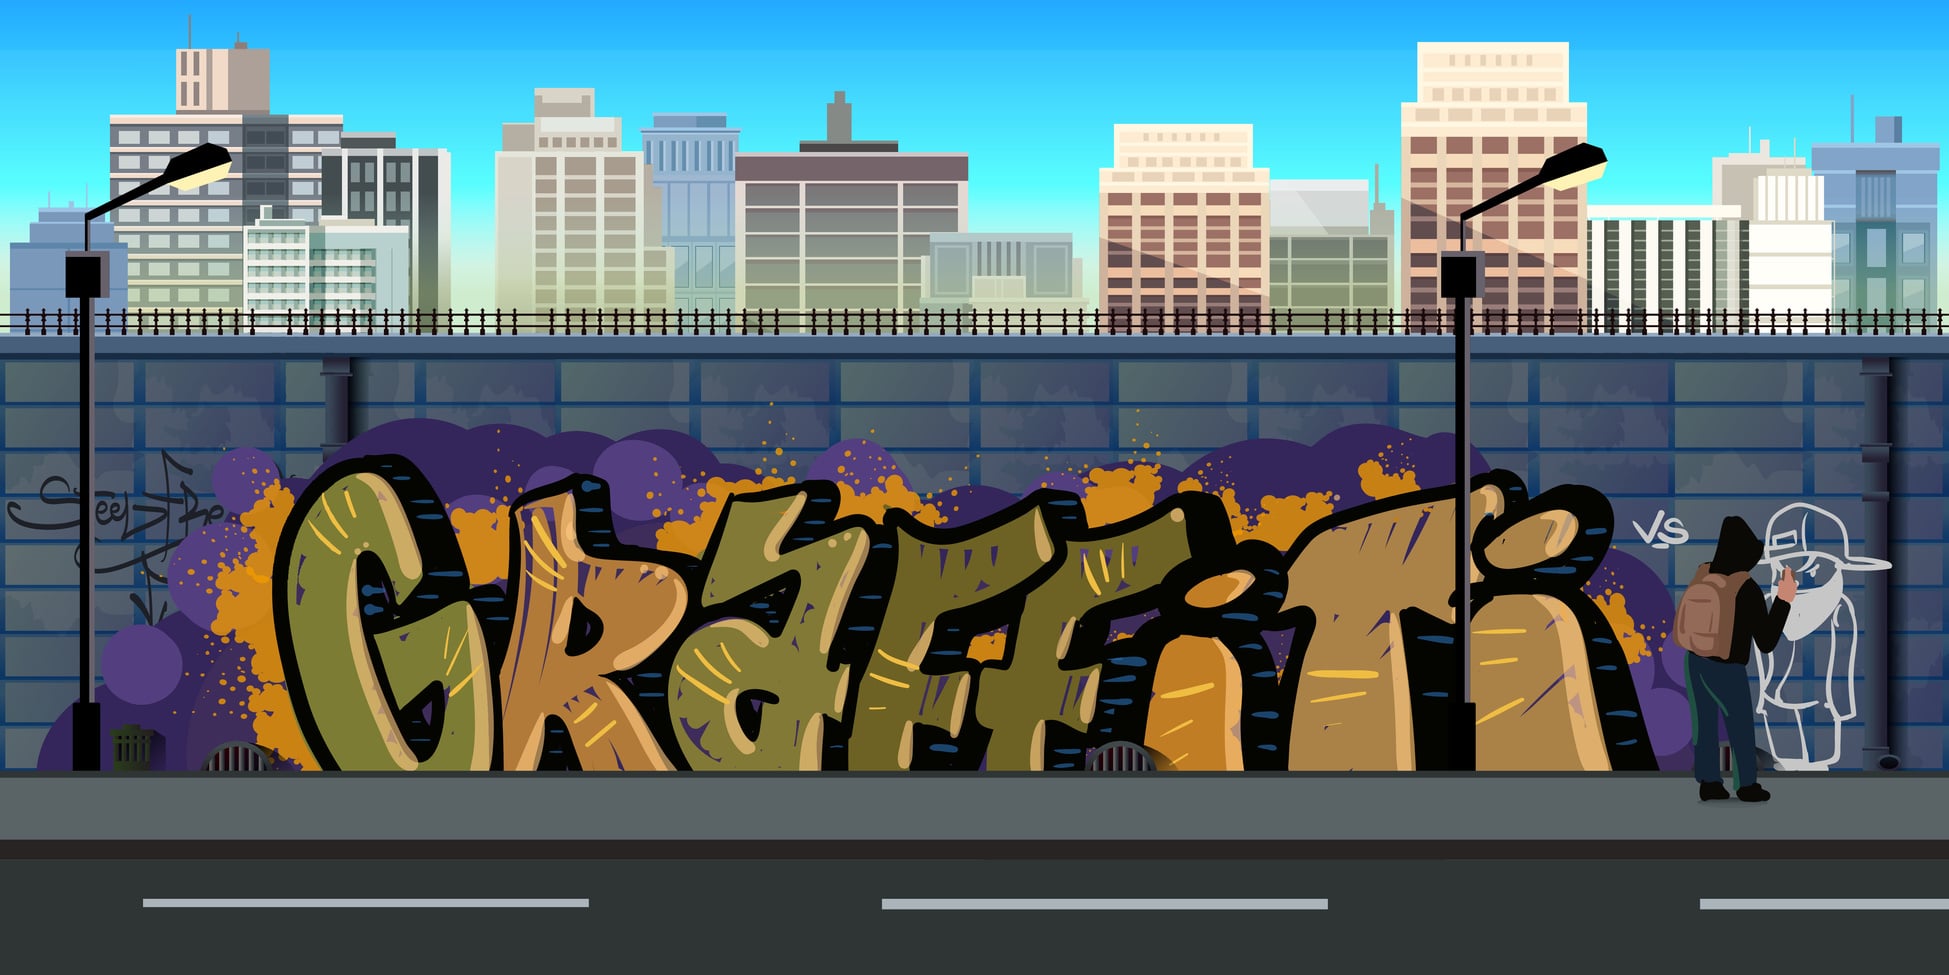 Graffiti Prevention and Removal